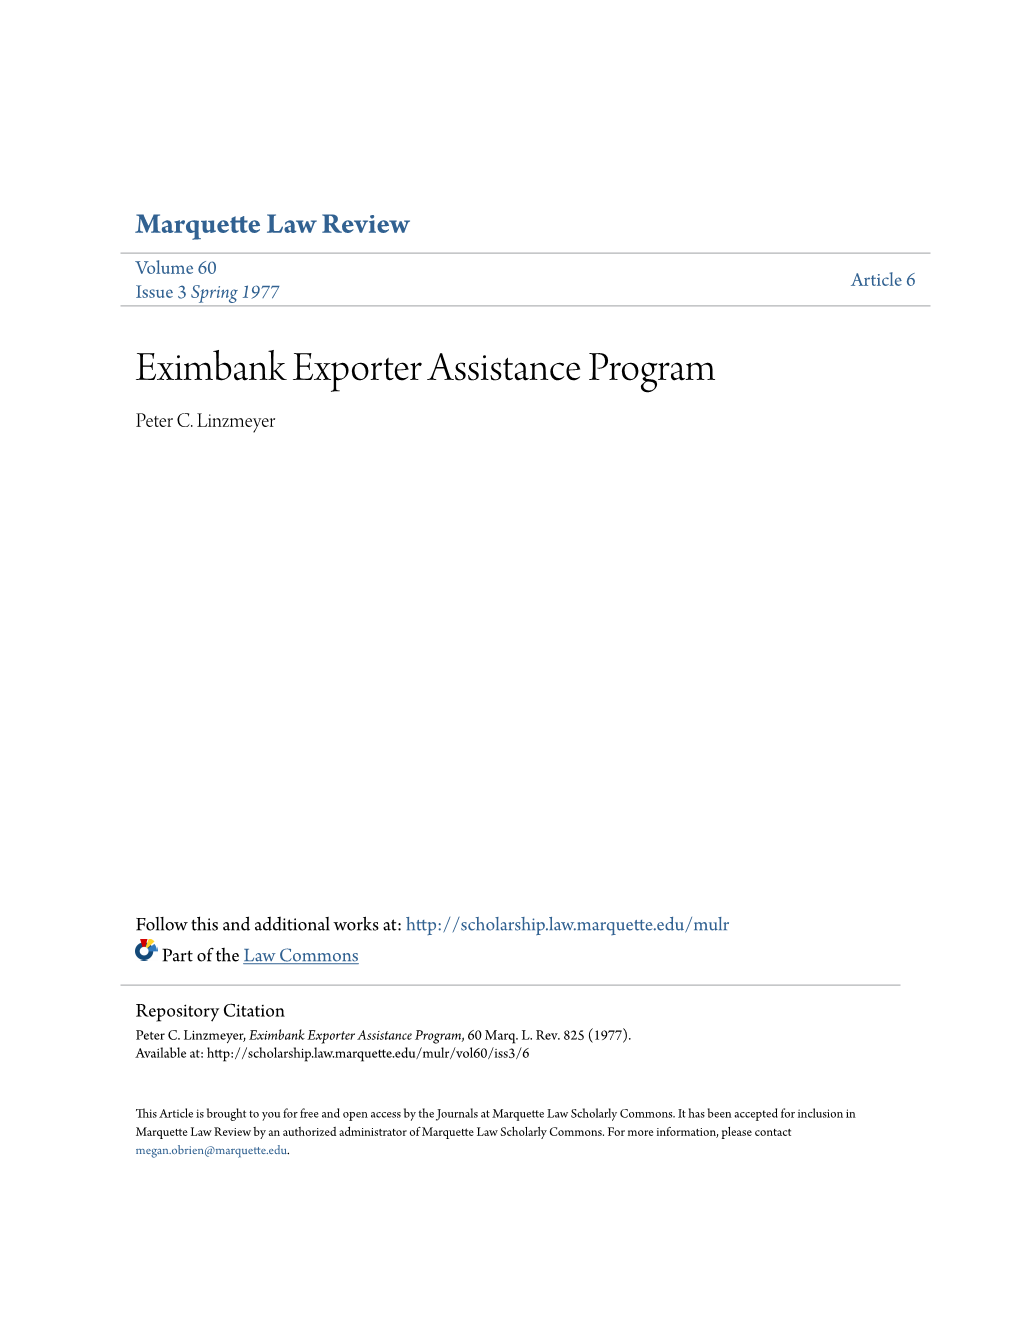 Eximbank Exporter Assistance Program Peter C